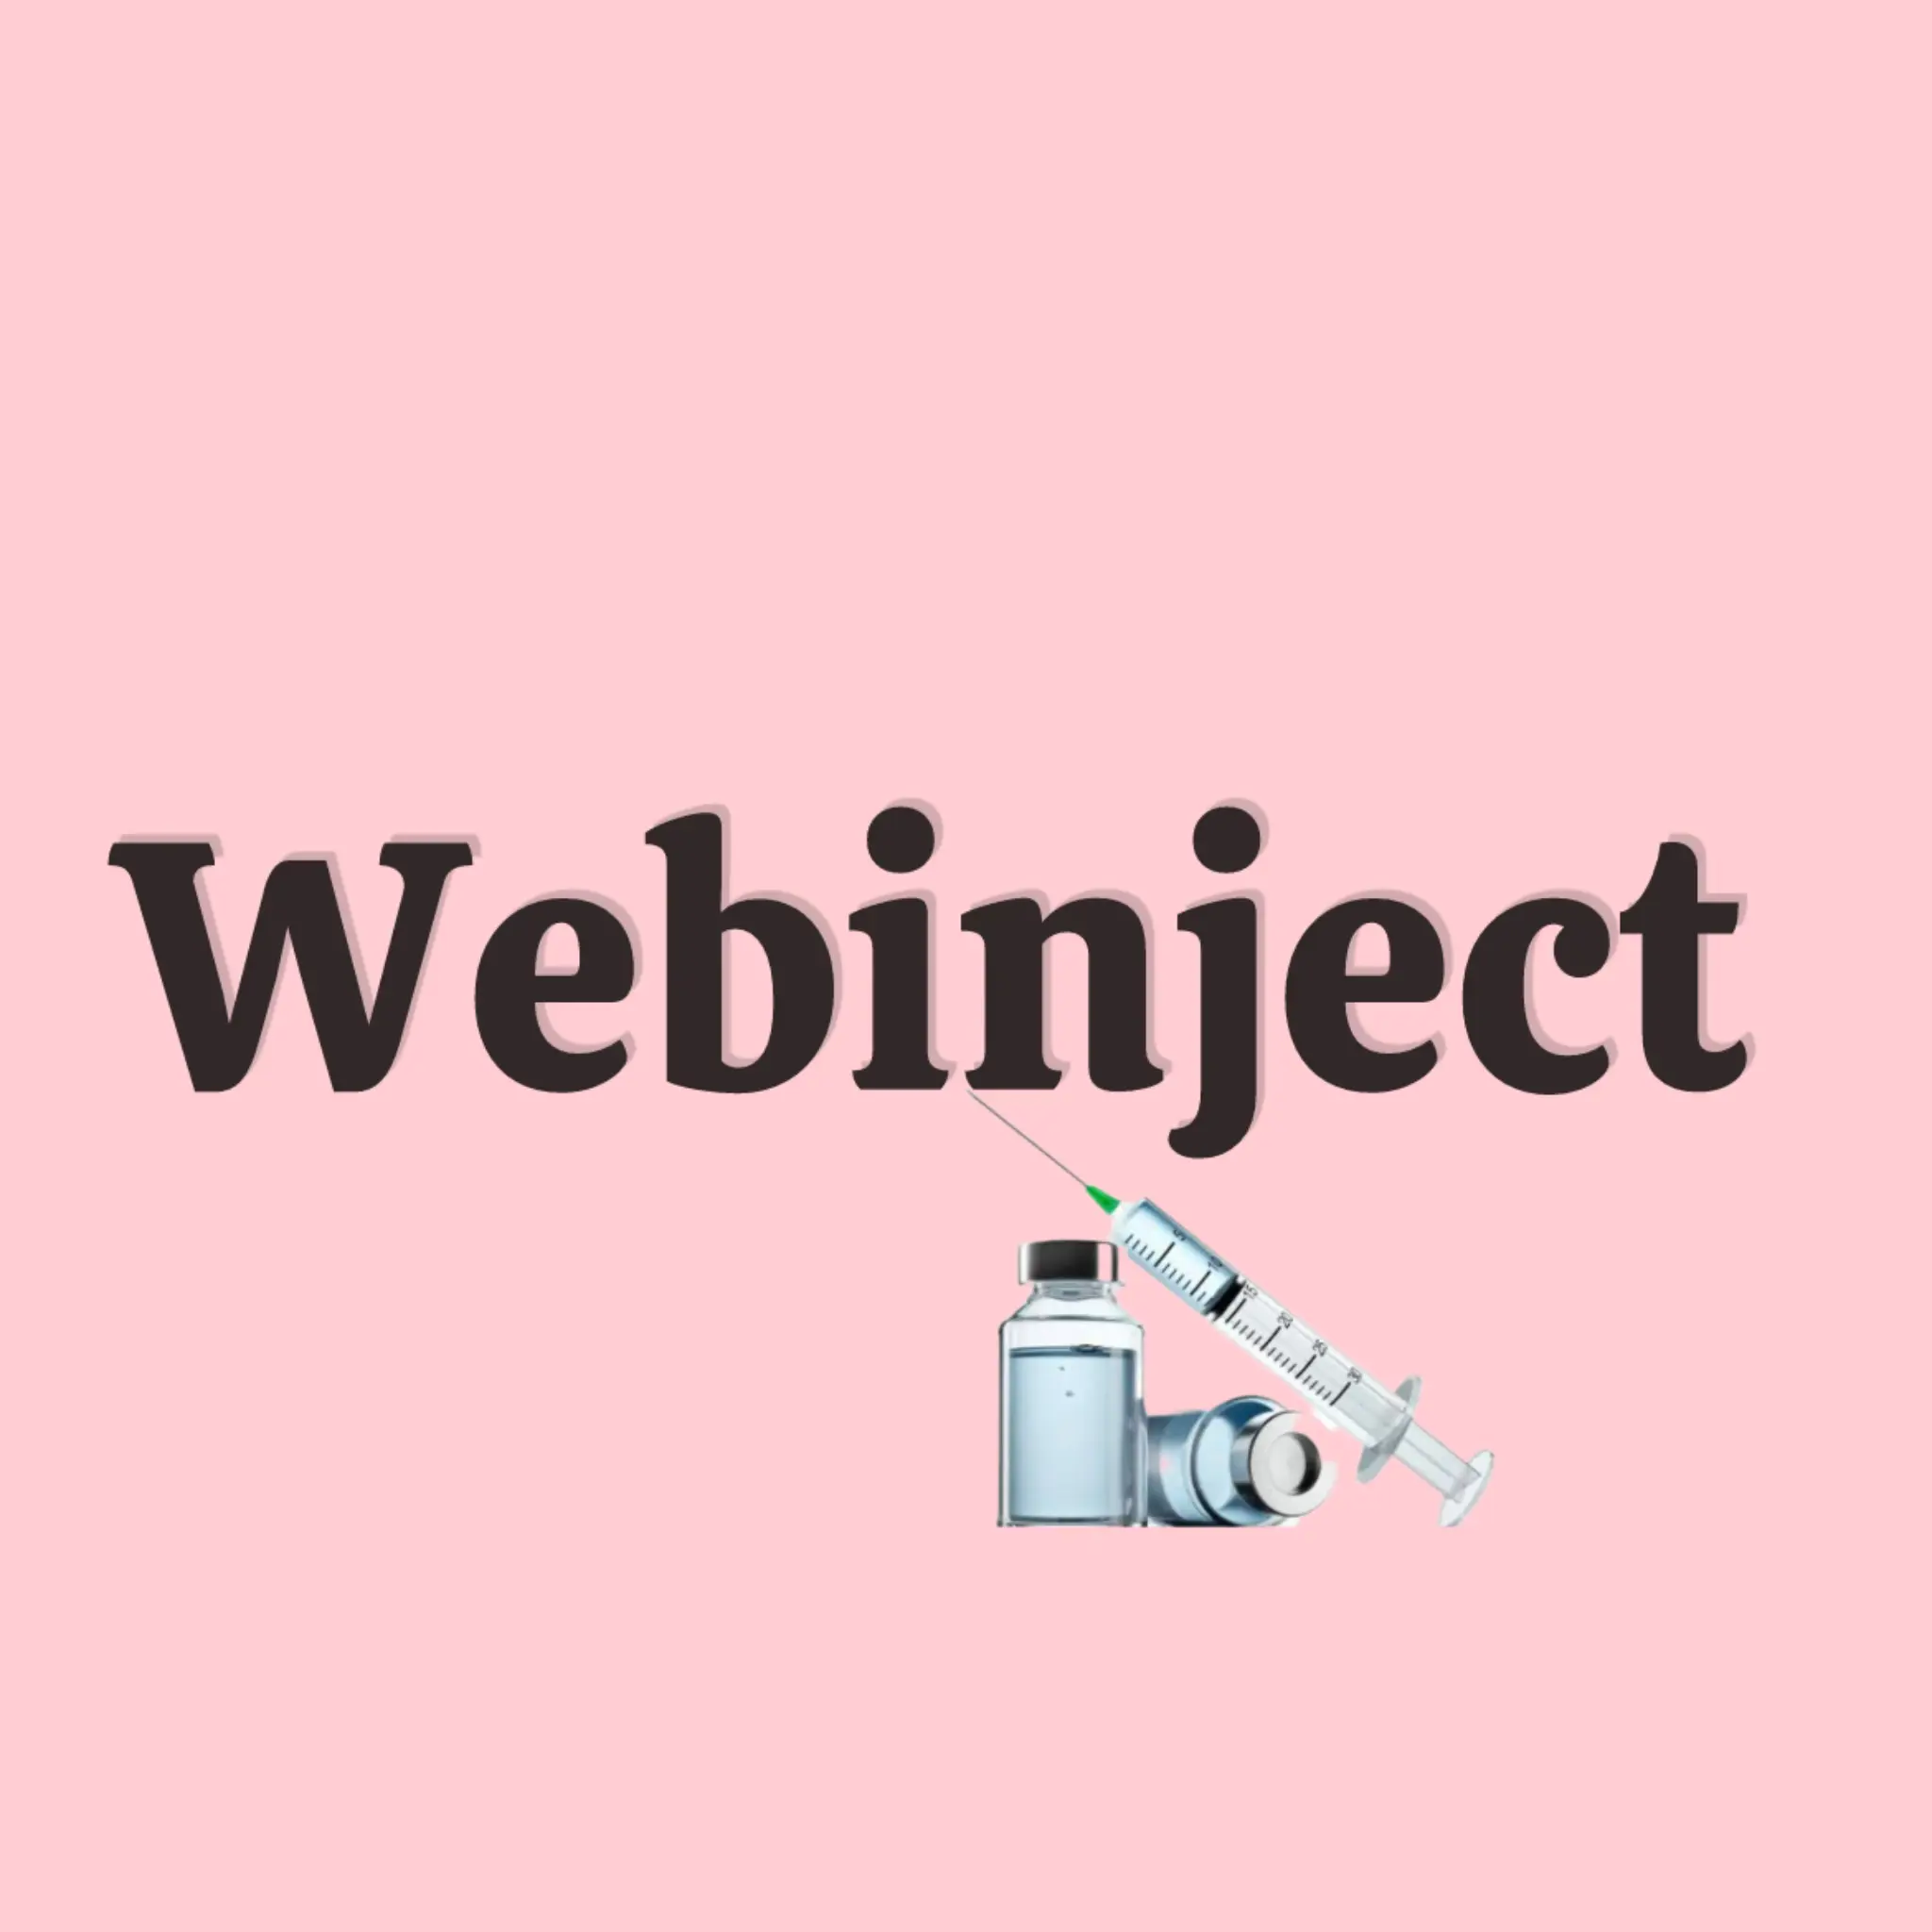 WebInject Articles logo